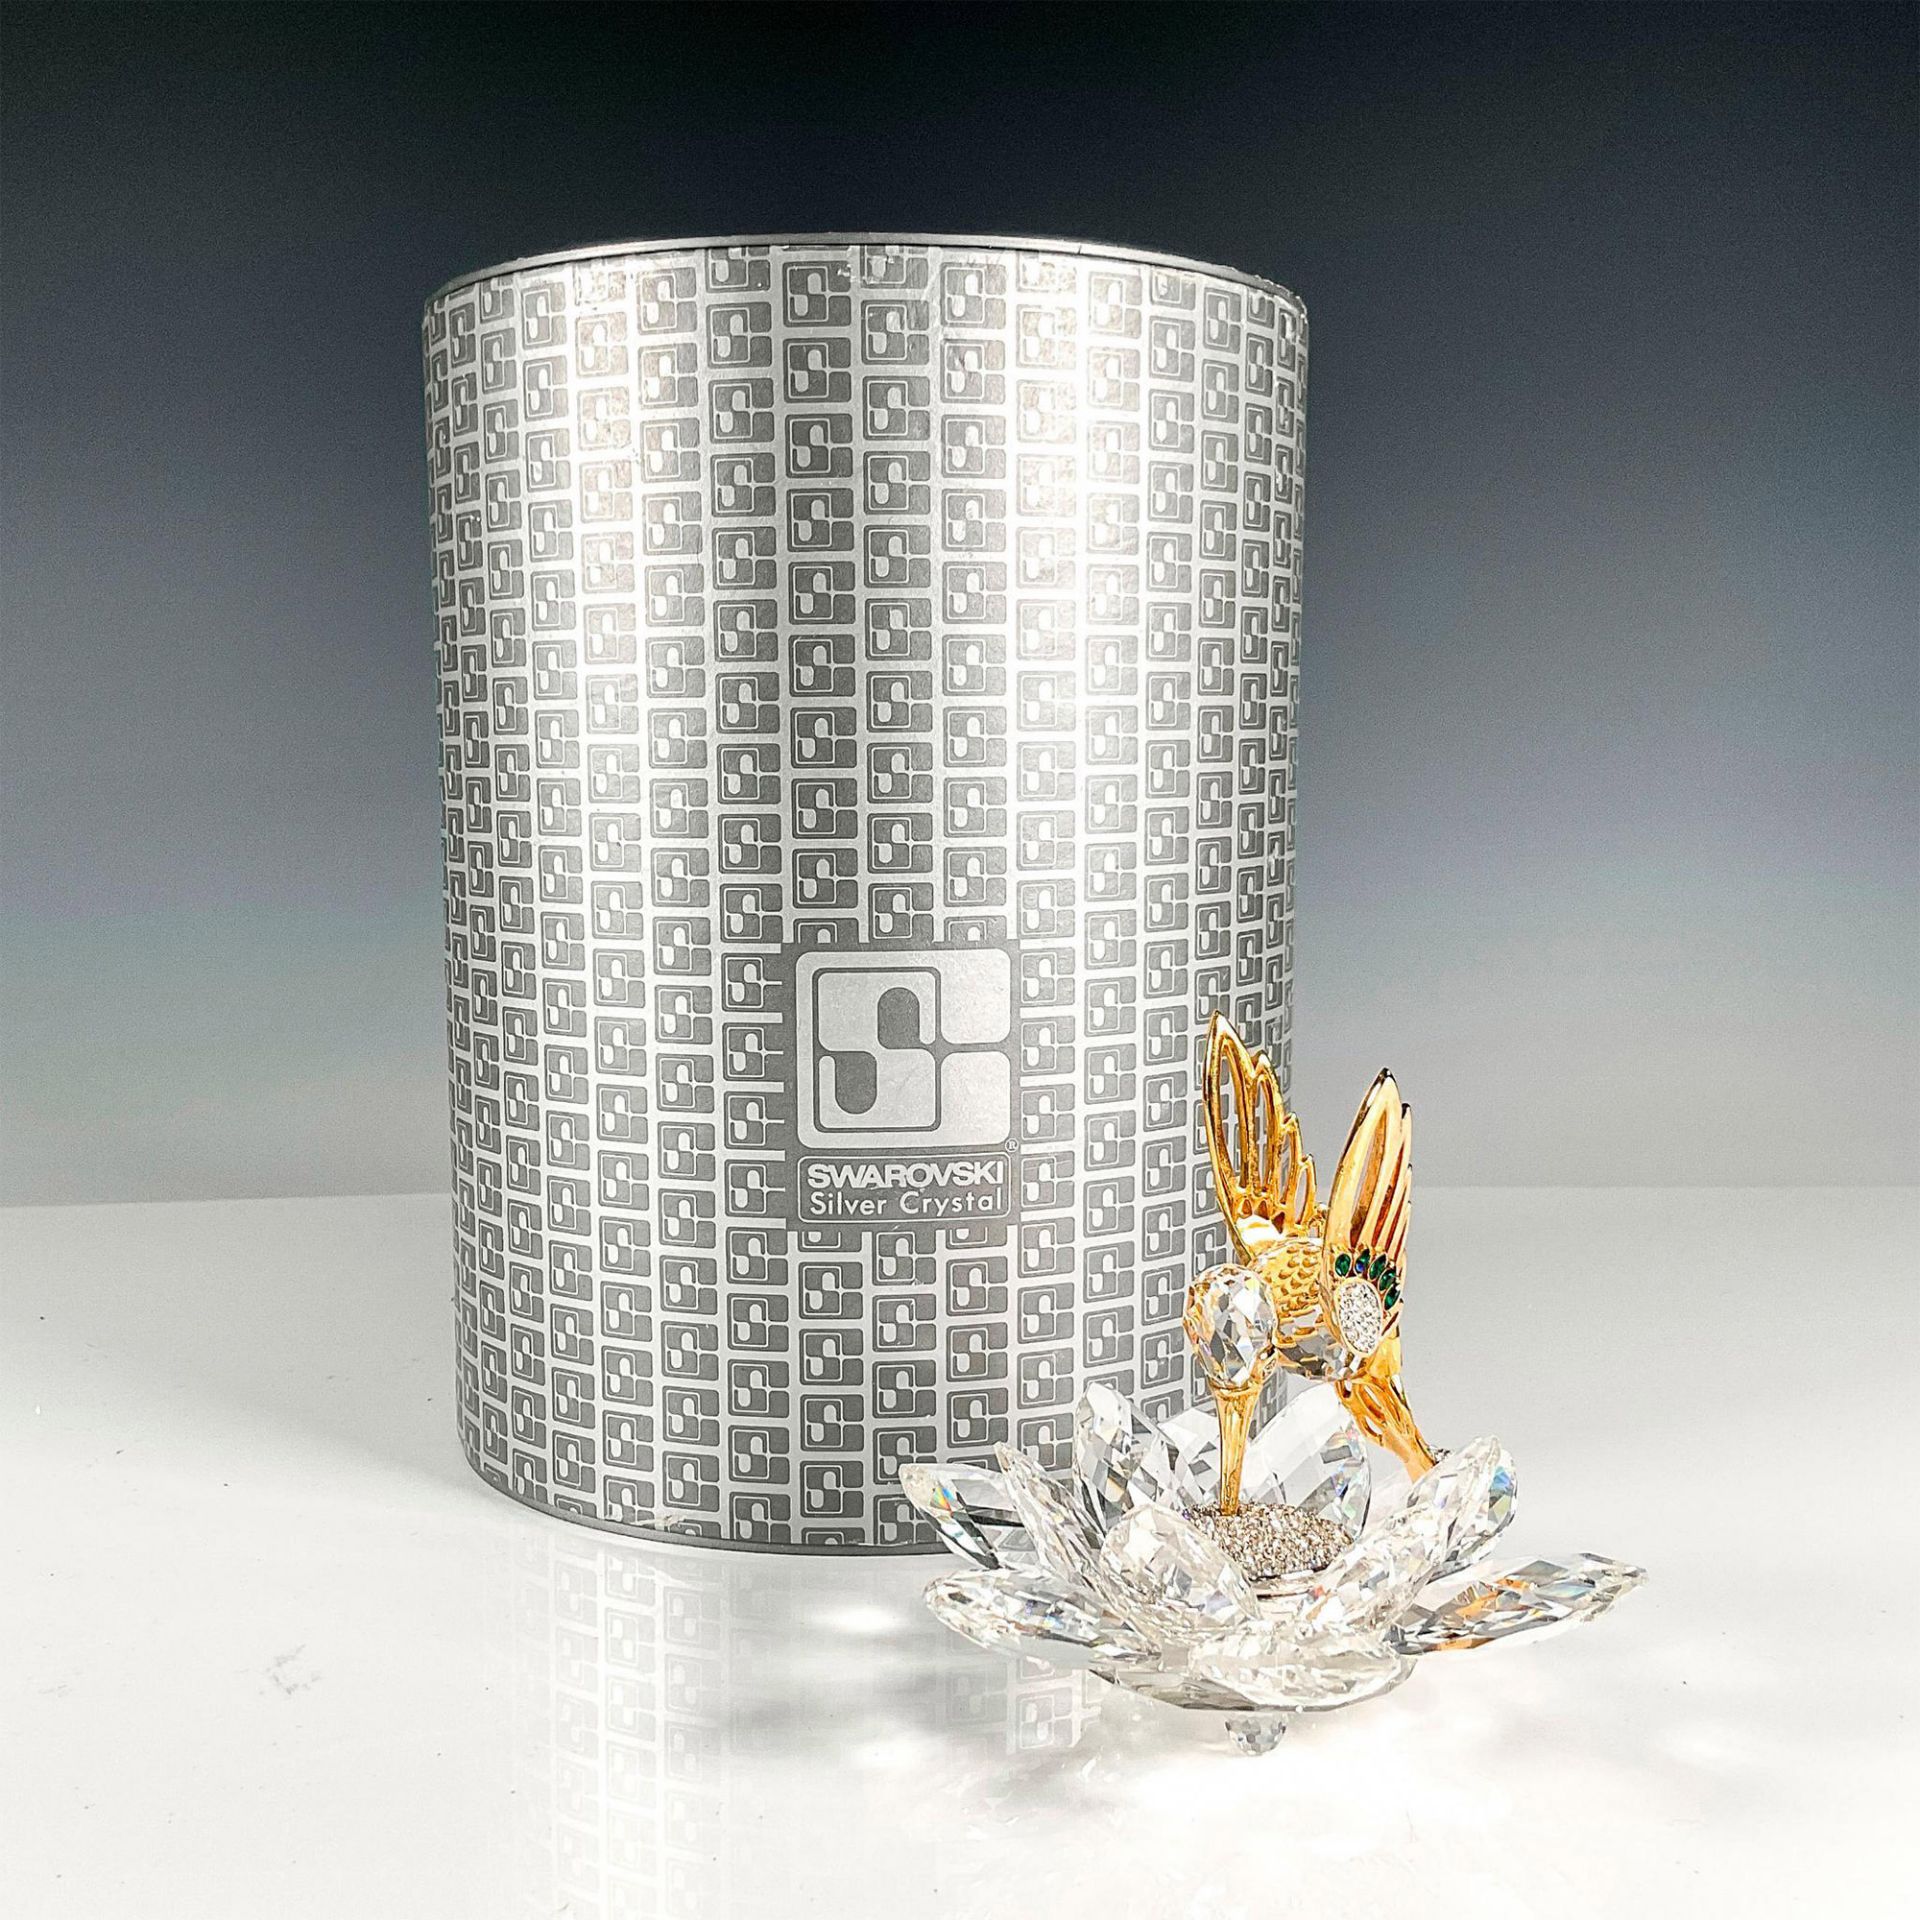 Swarovski Silver Crystal Figurine, Hummingbird in Flight - Image 4 of 4